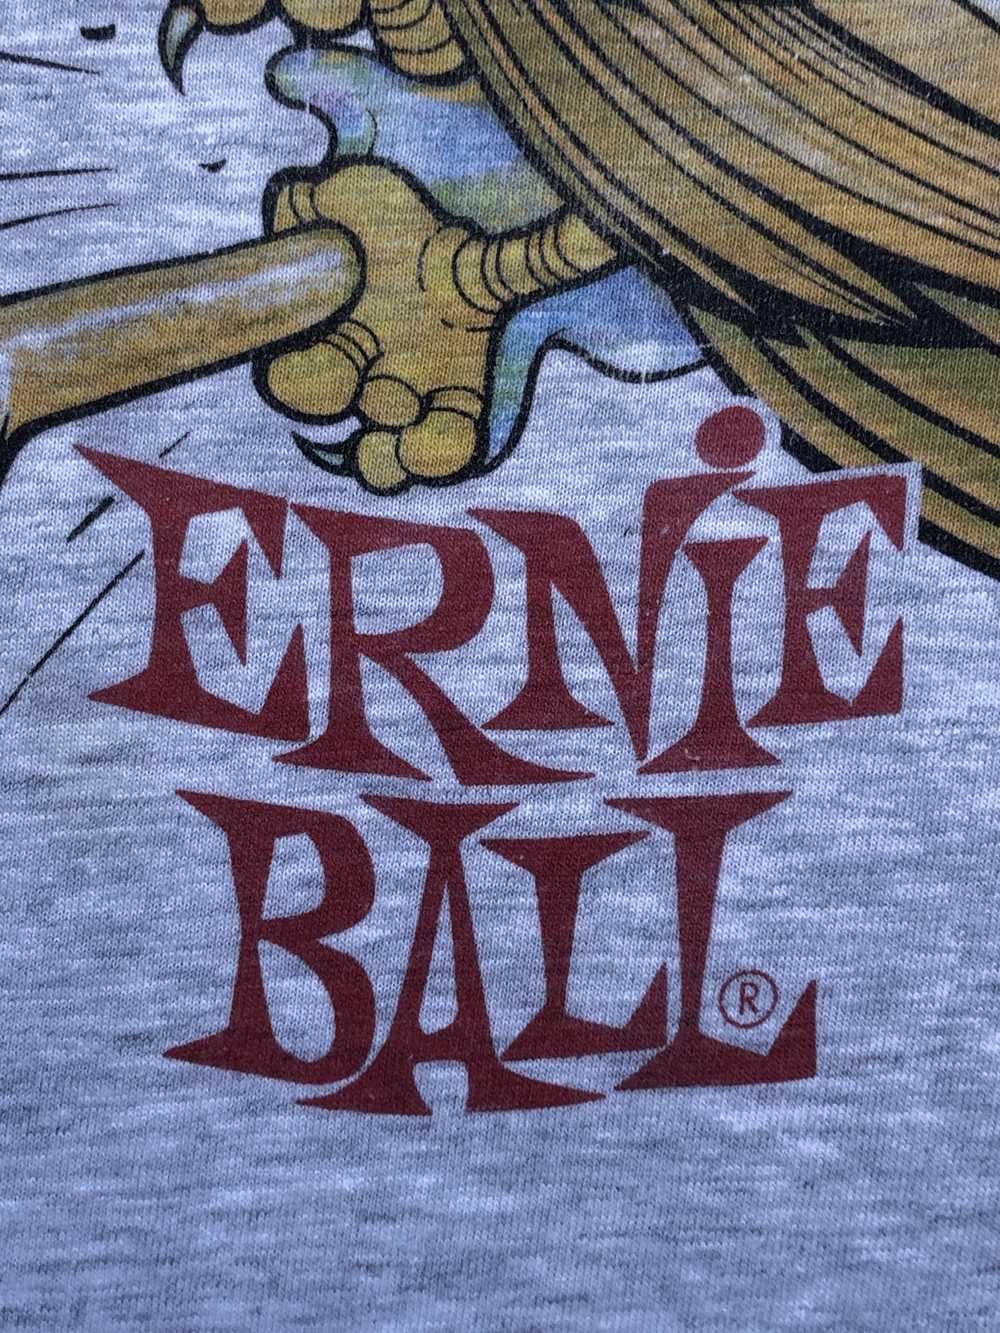 Band Tees × Hanes × Vintage Vintage Ernie Ball Te… - image 4